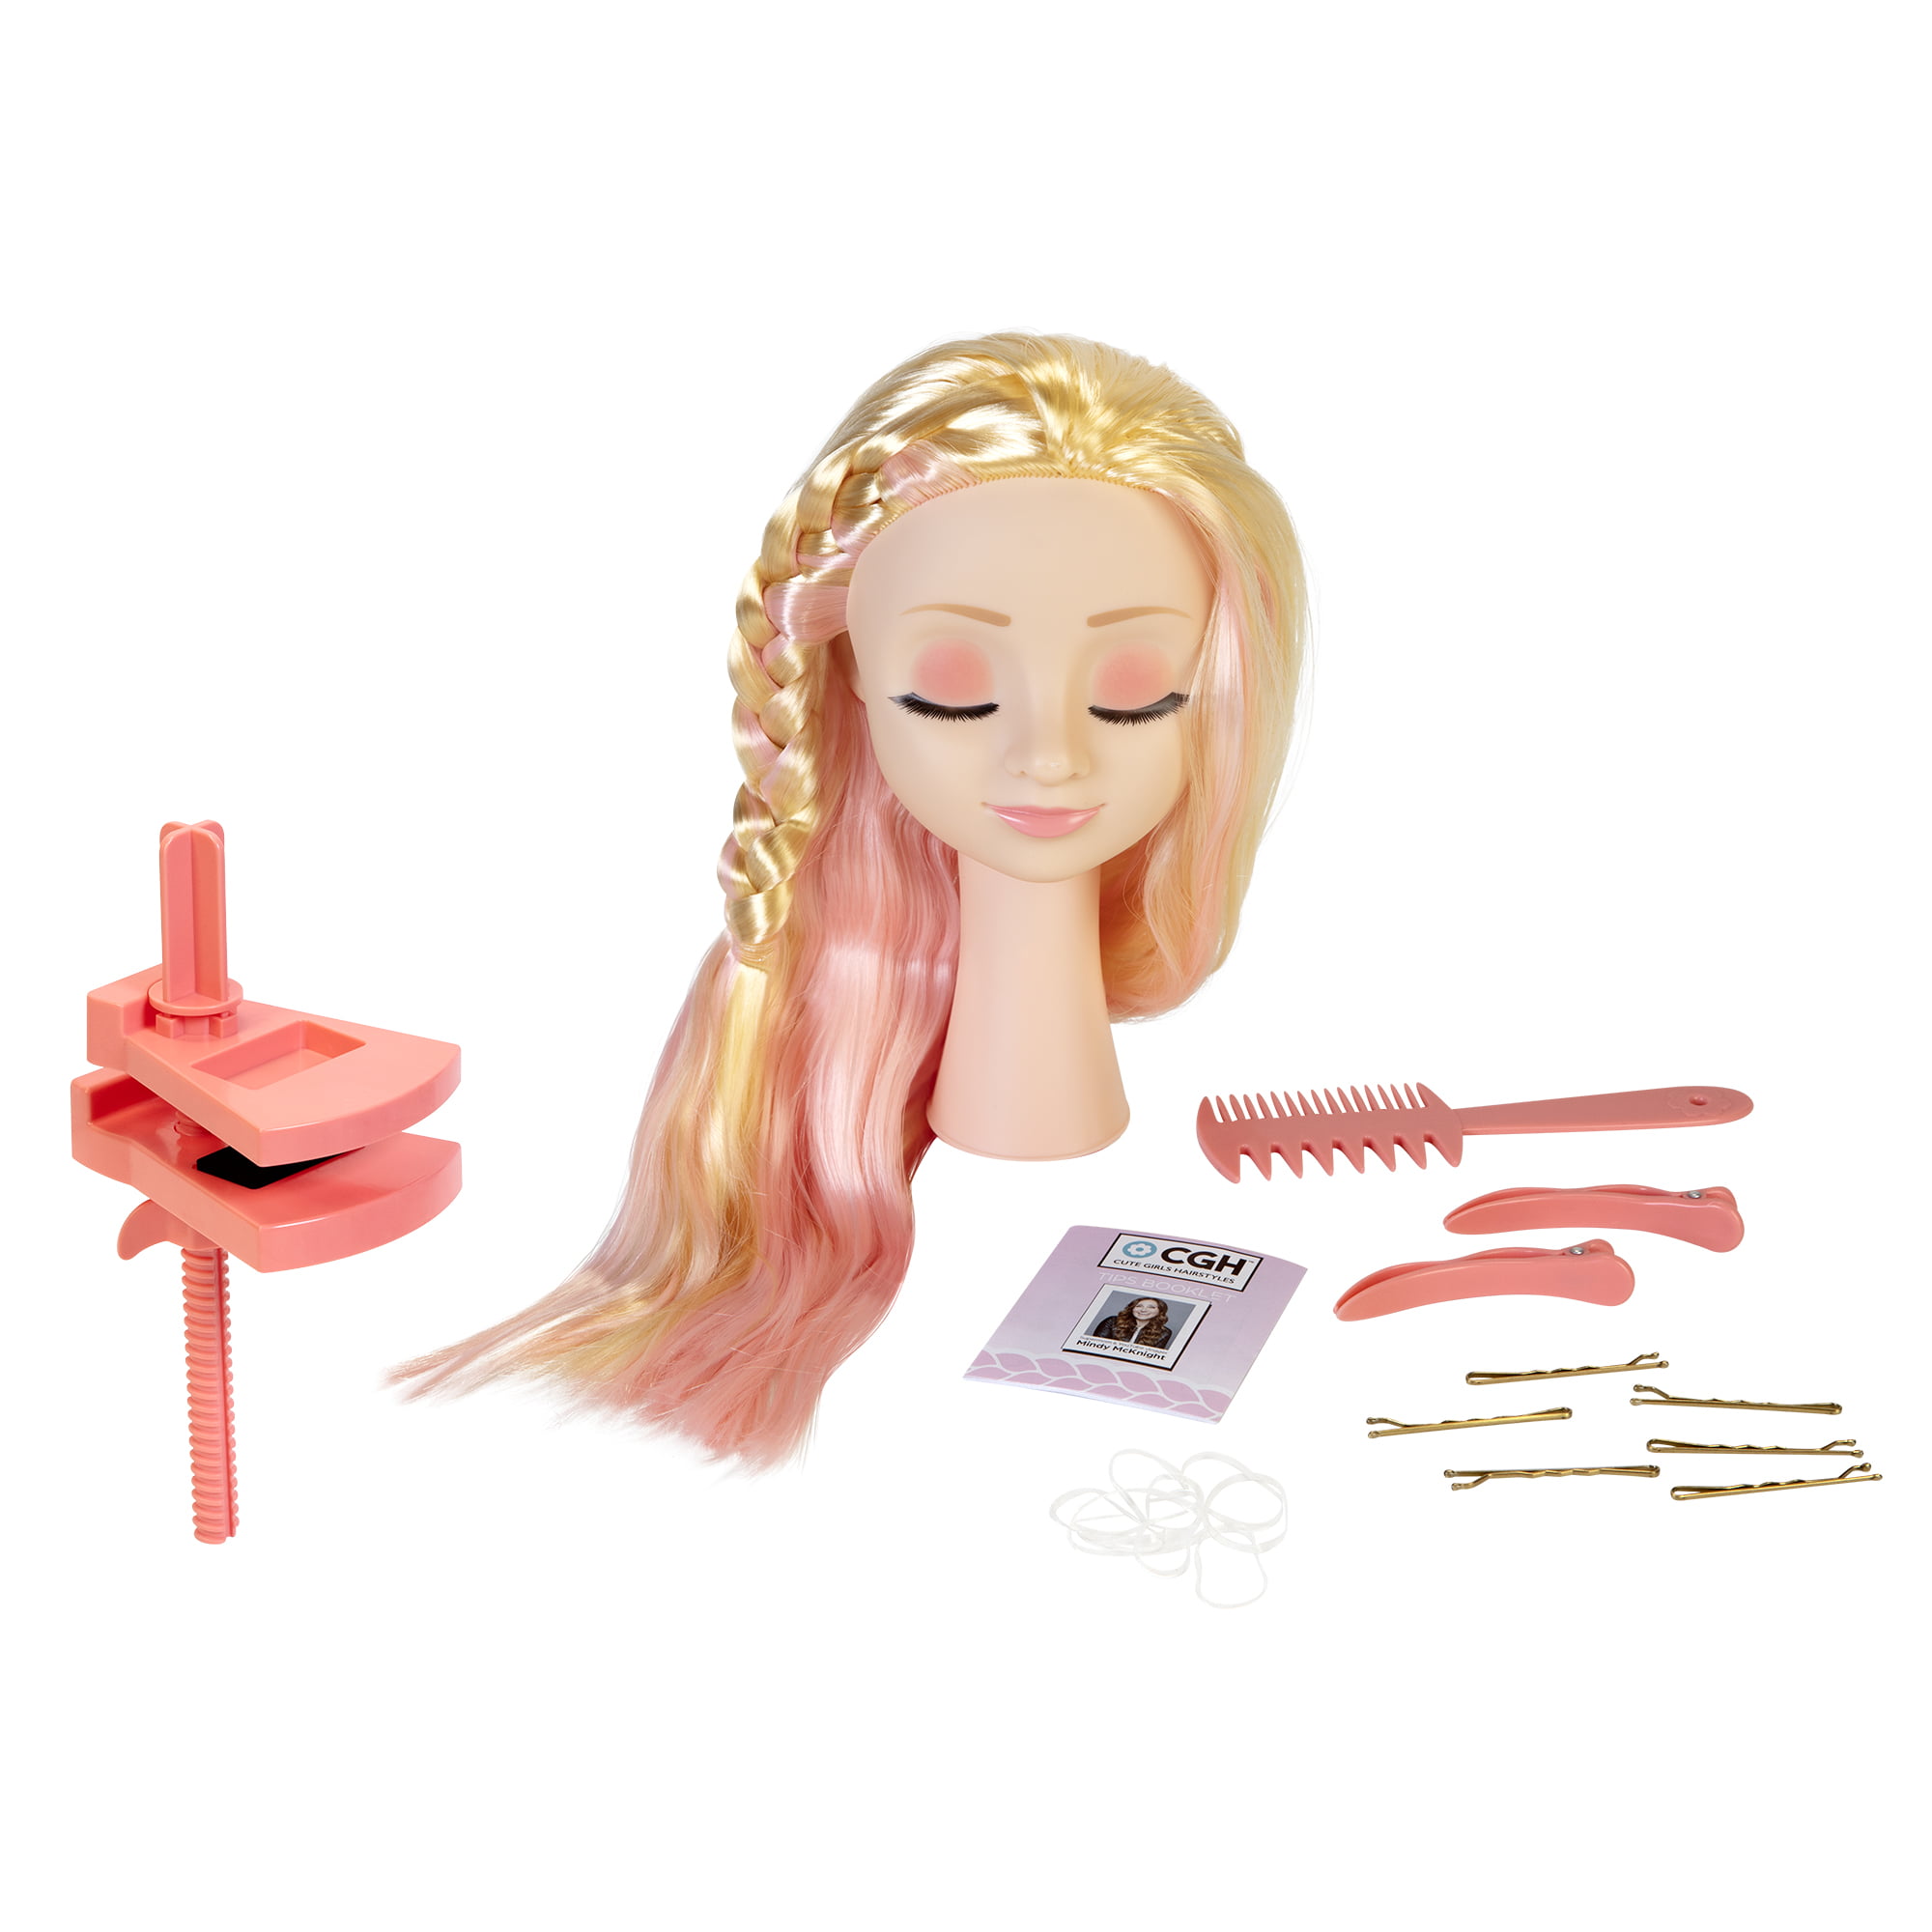 CGH Cute Girls Hairstyles! Styling Head - Straight Blonde Hair Doll